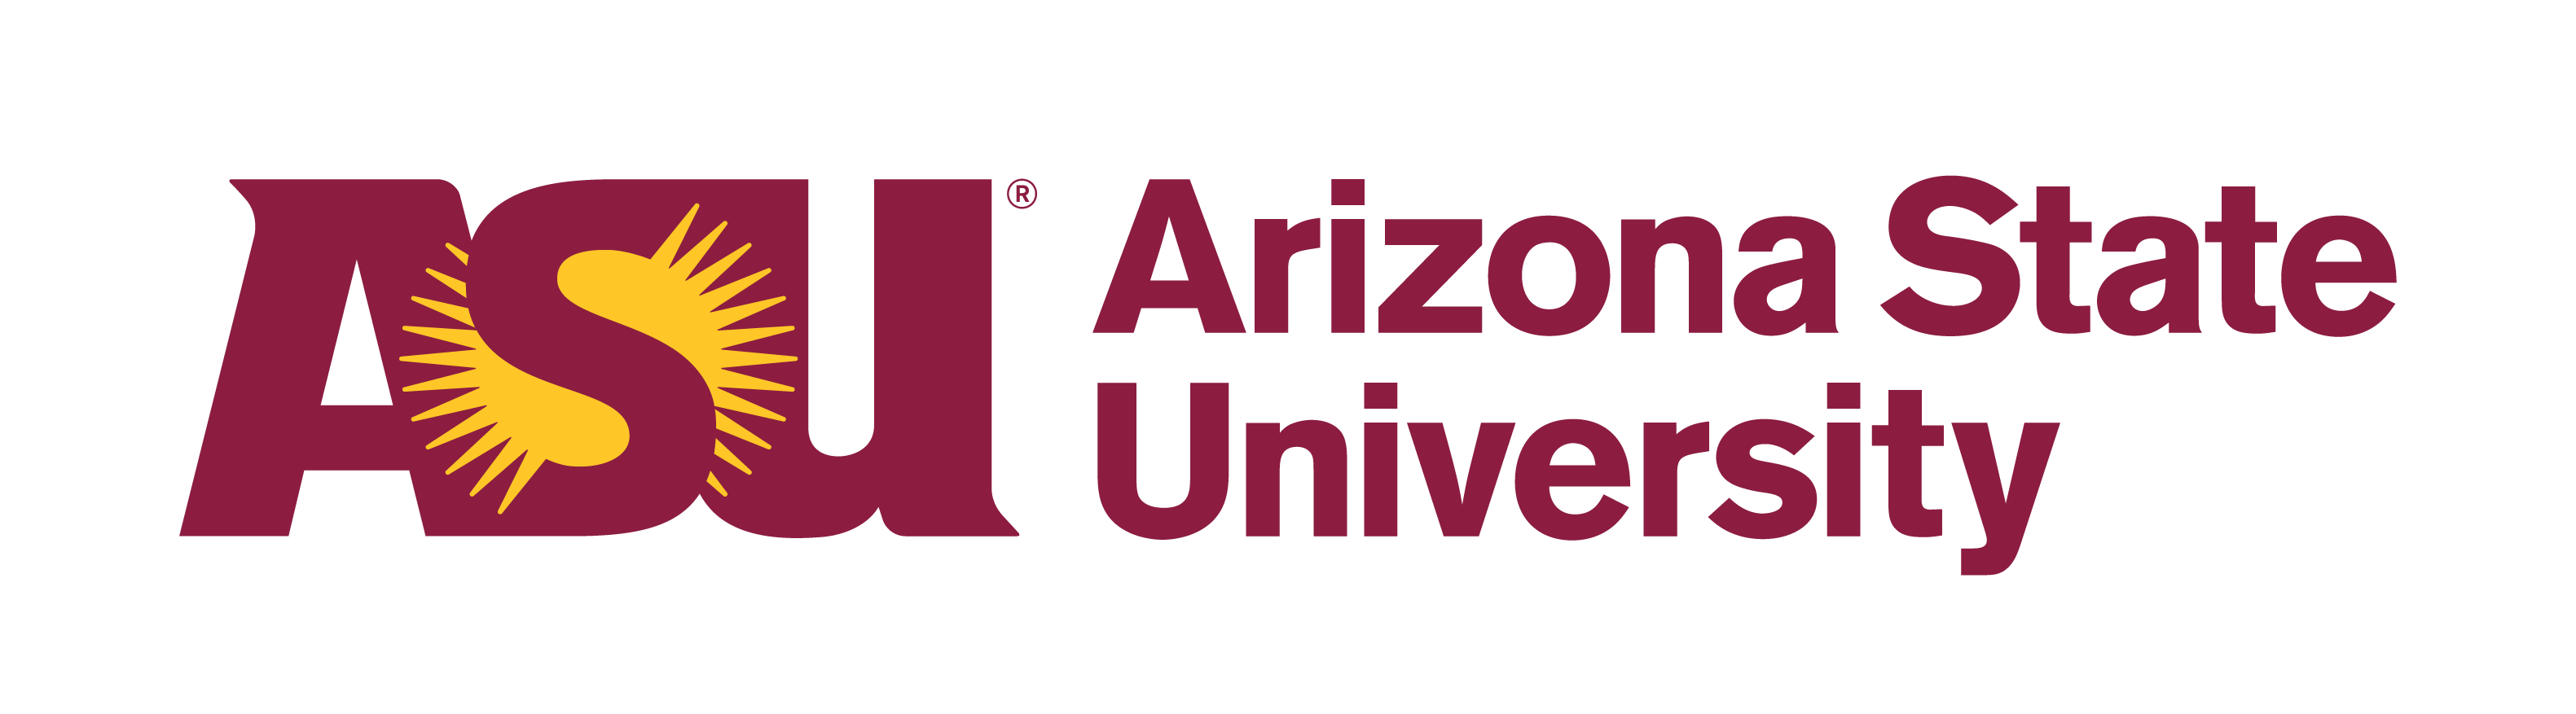 Arizona State University Logo - Arizona State University partners for Water/Ways exhibit